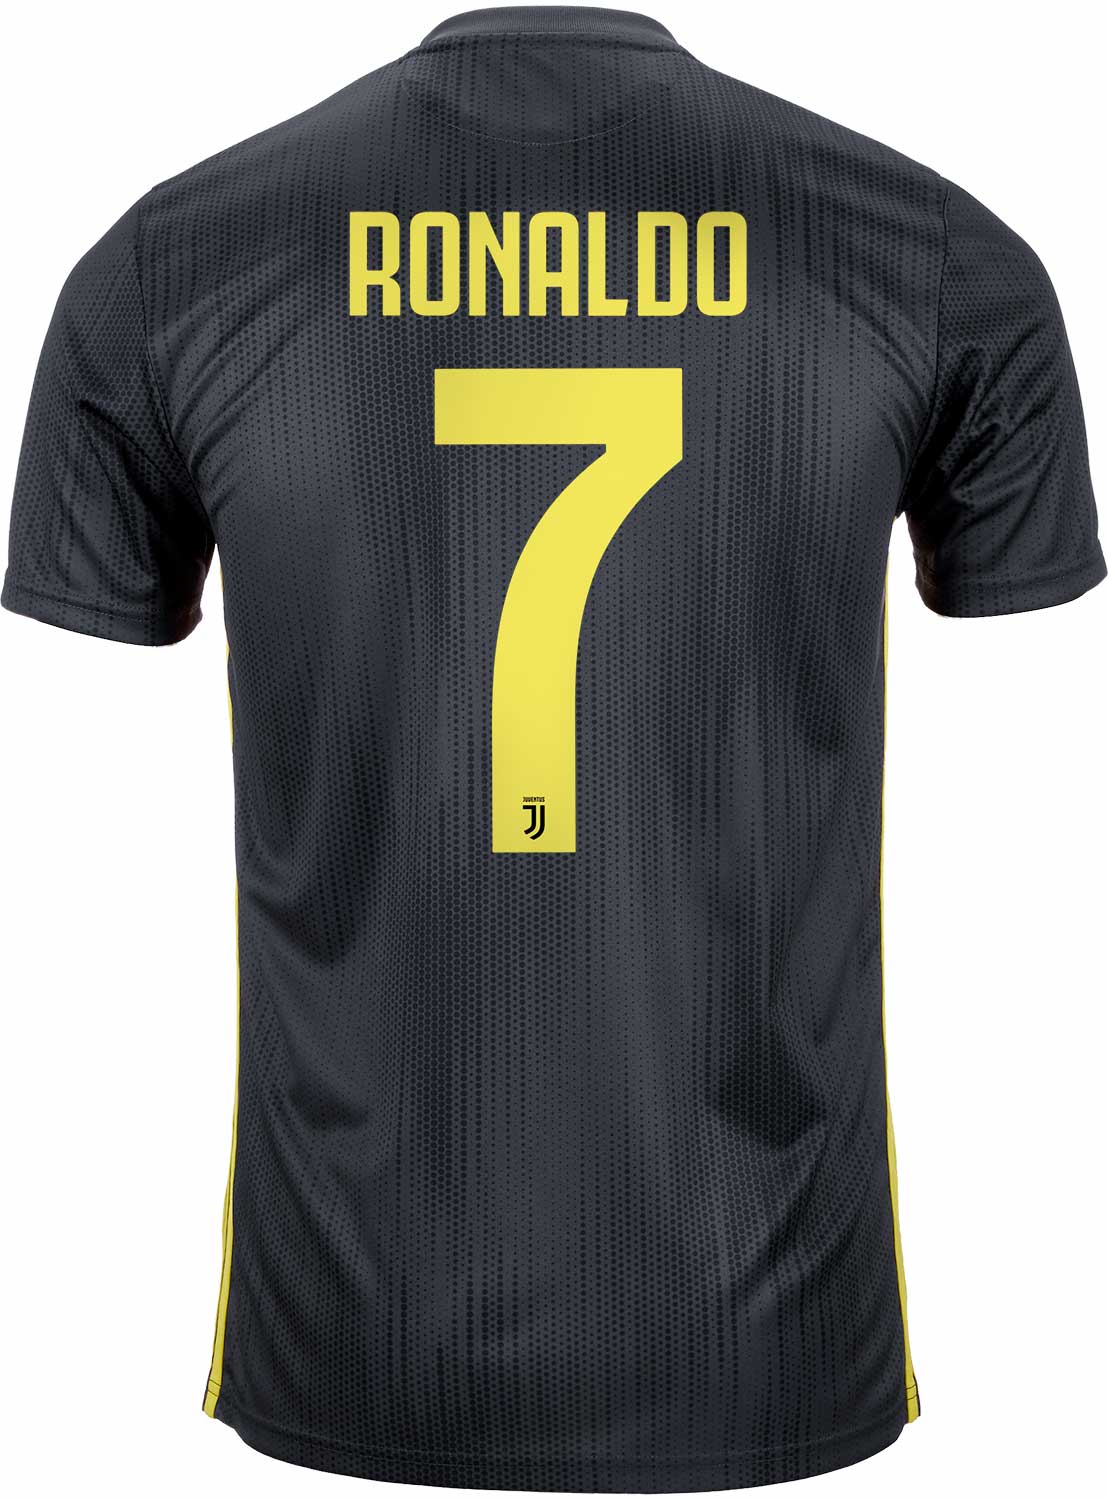 ronaldo jersey 2018